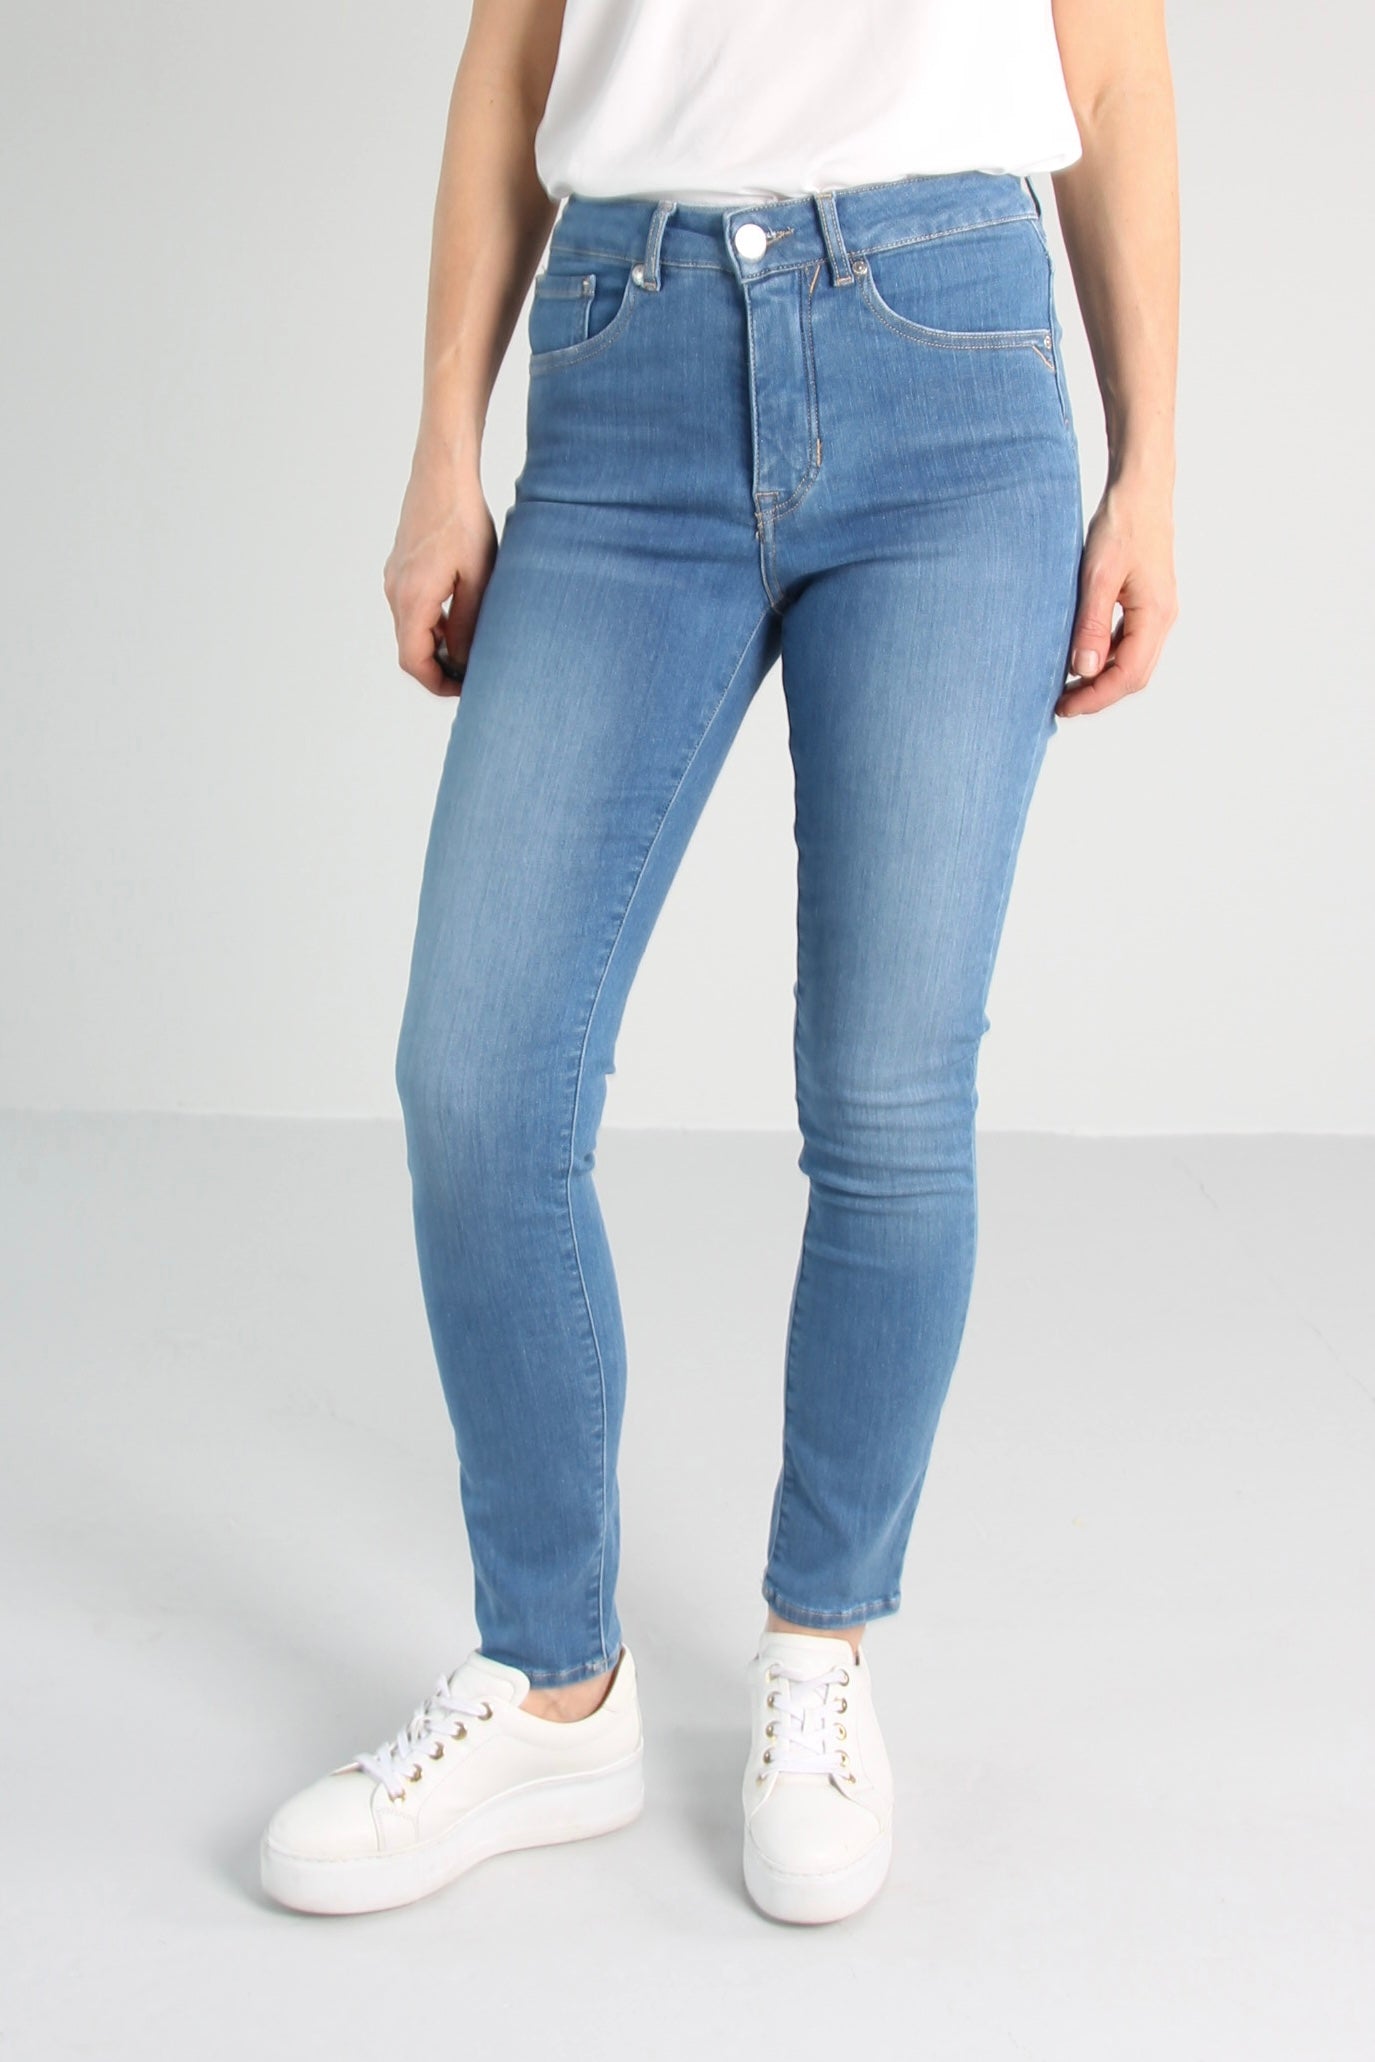 Få igjen - Ellery Sea blue Jeans - Dame - Tailored  - High waist - Stretchy